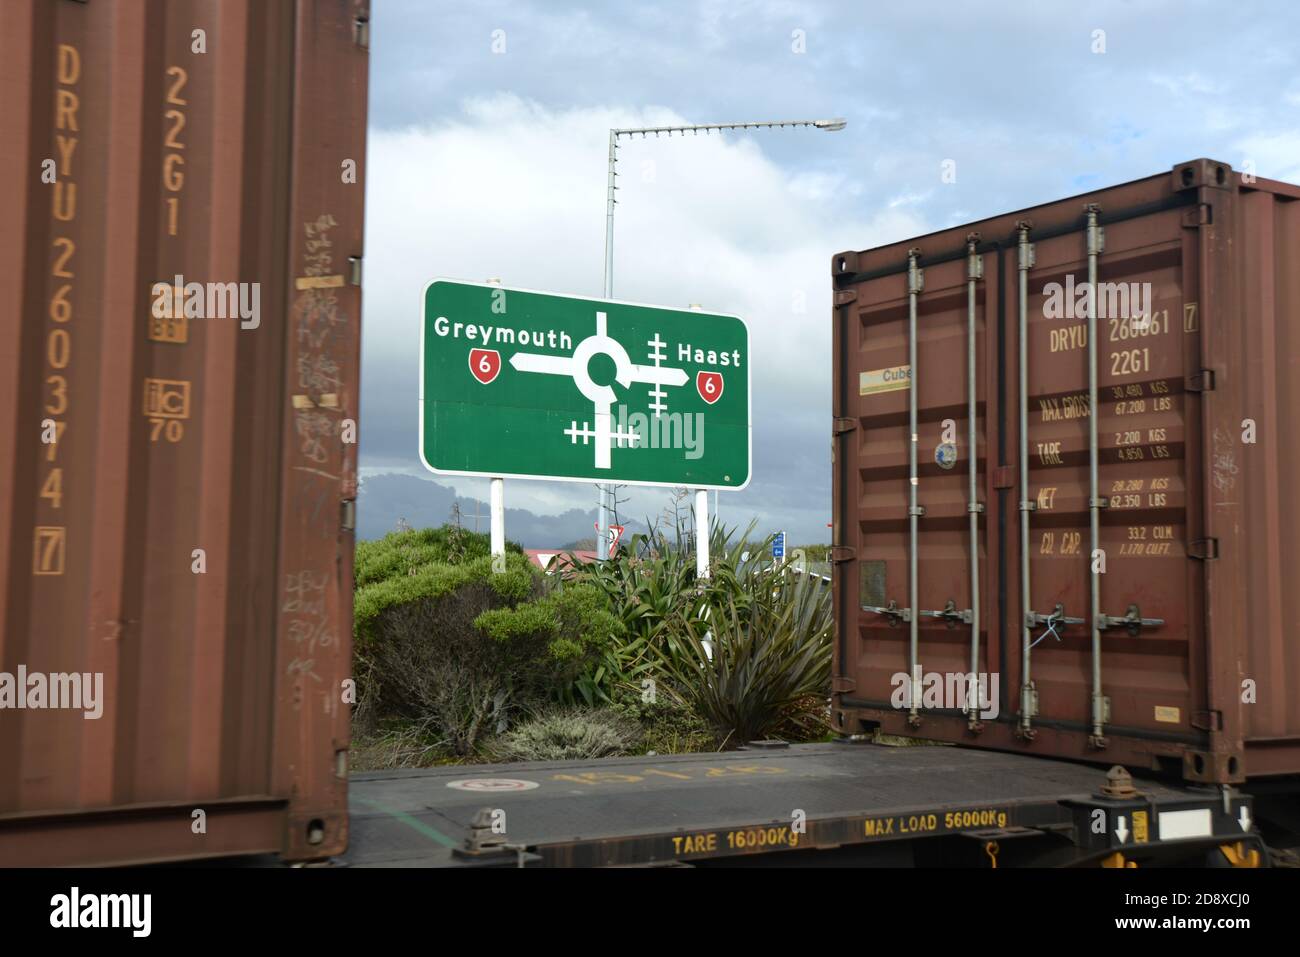 HOKITIKA, NEW ZEALAND, AUGUST 29, 2020: A freight train crosses the main street of Hokitika near the roundabout on State Highway 6. Stock Photo